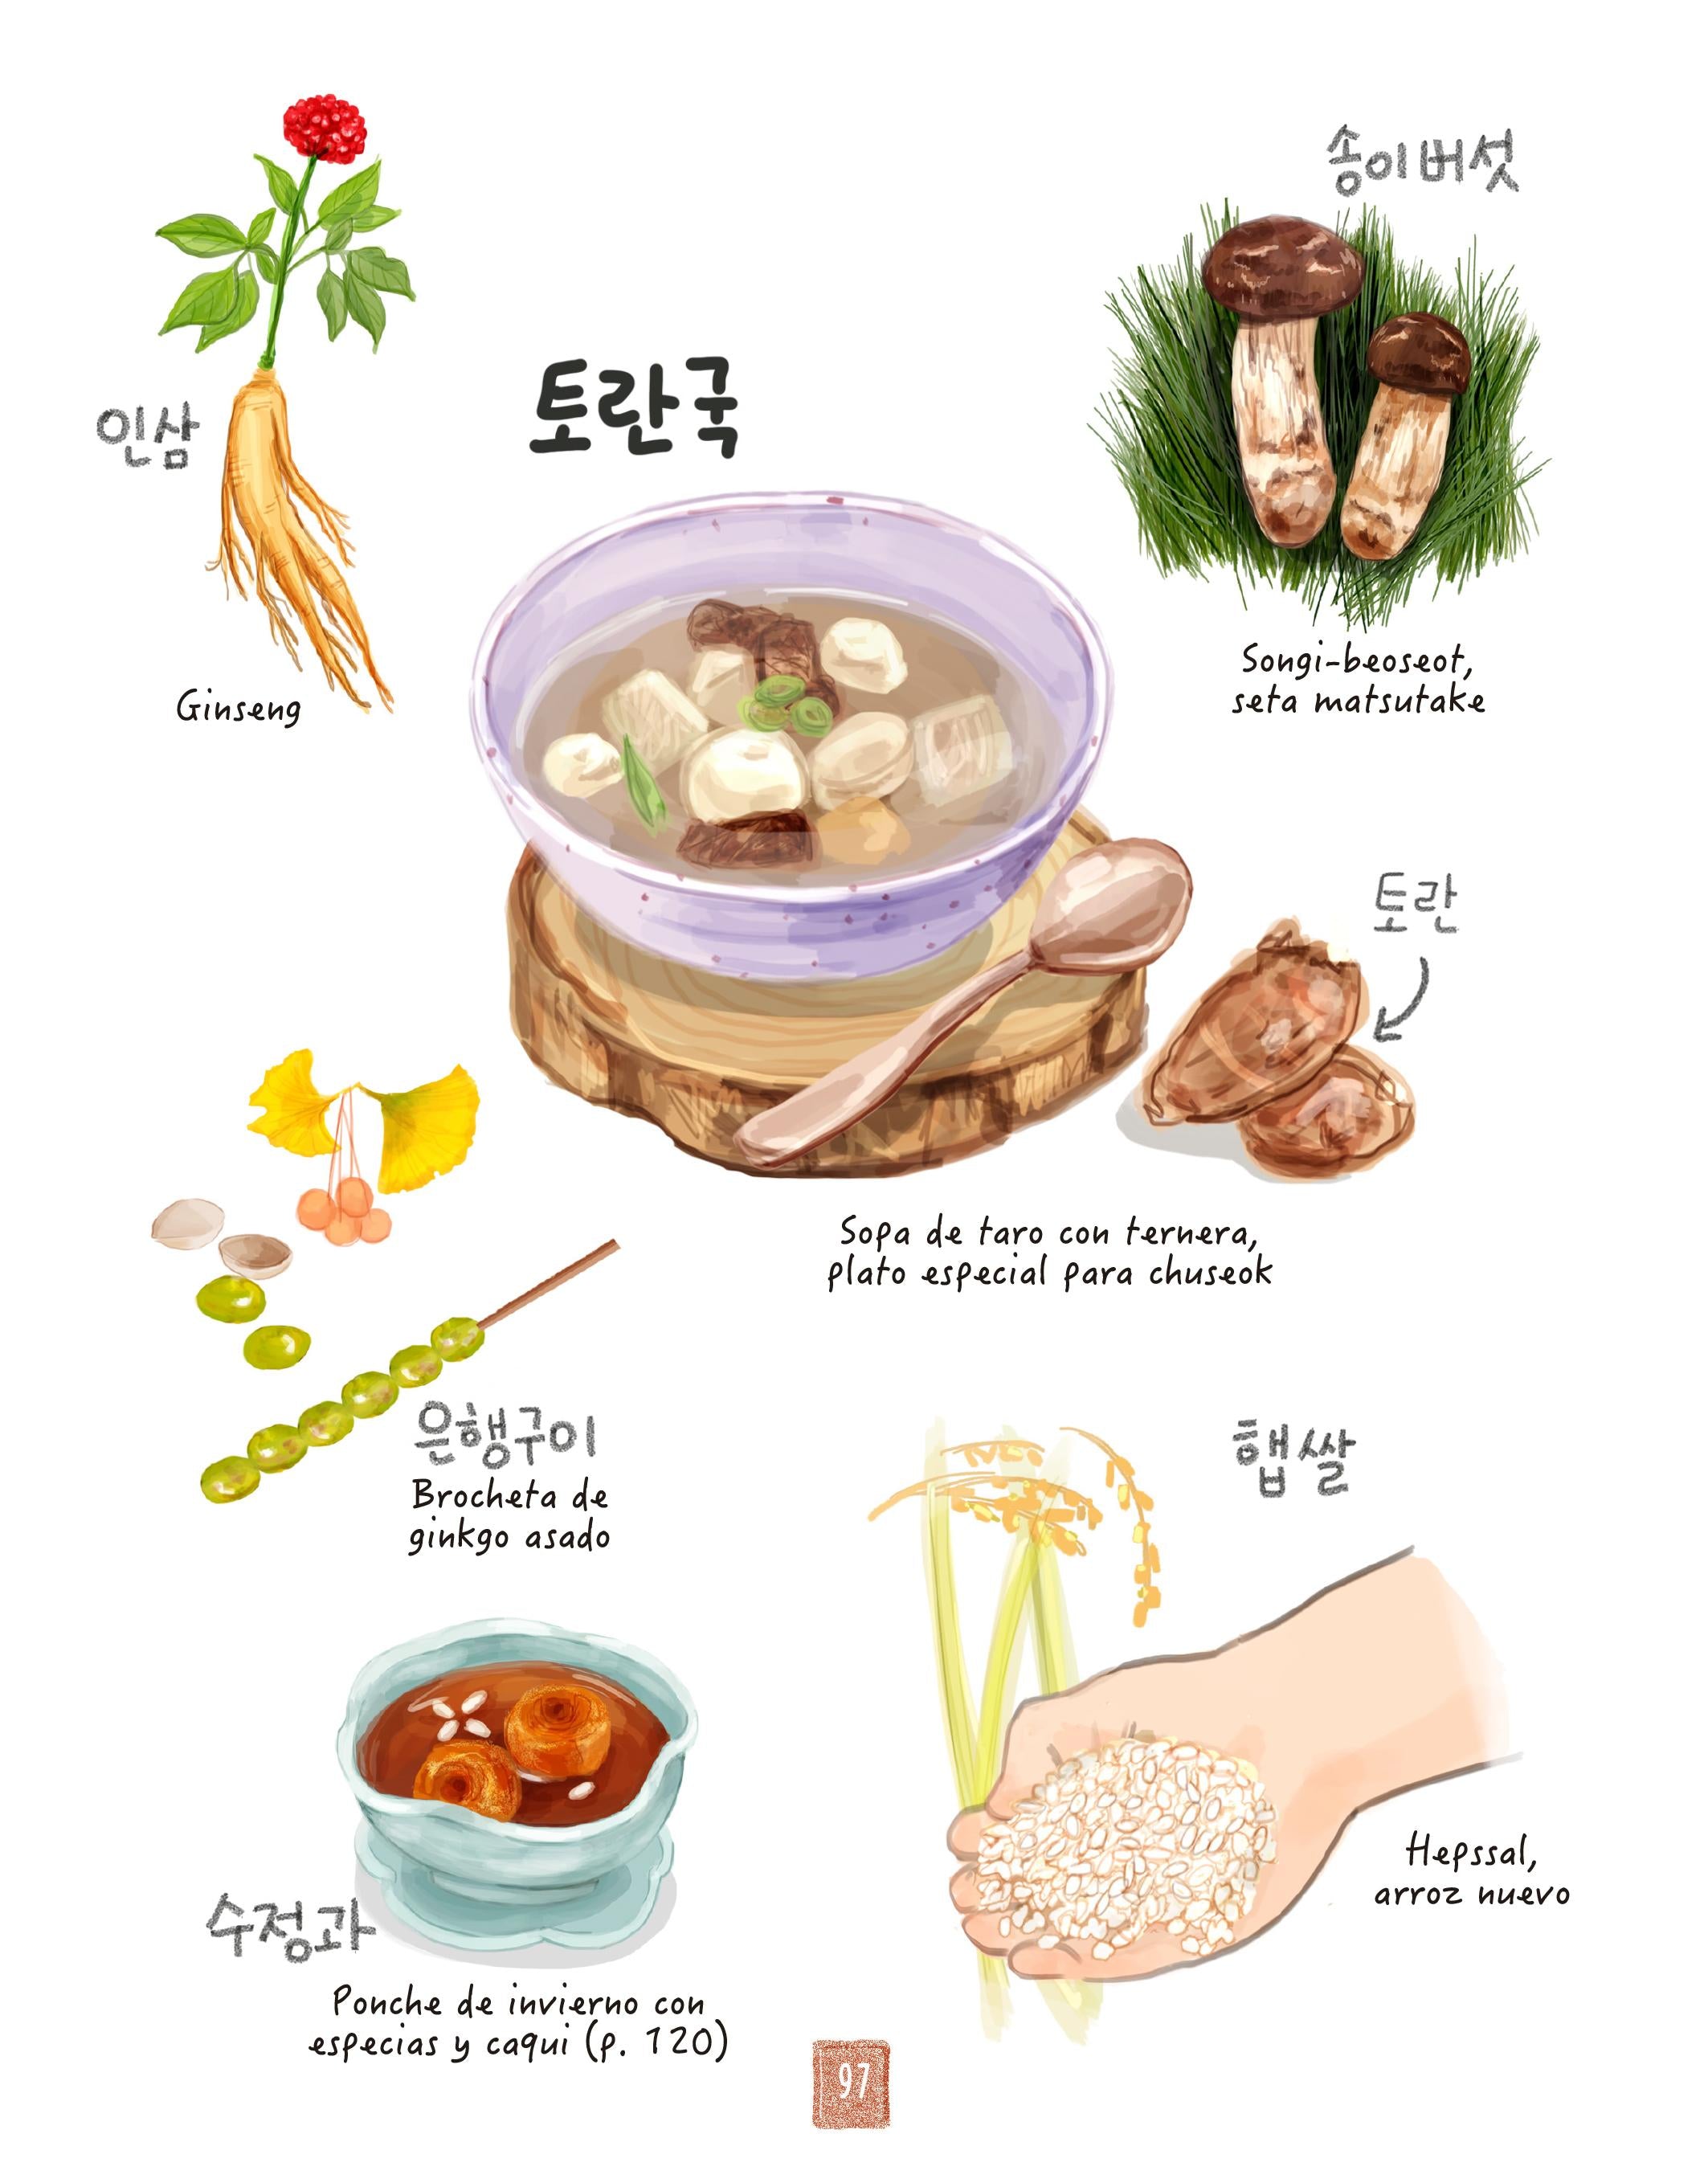 La cocina coreana ilustrada